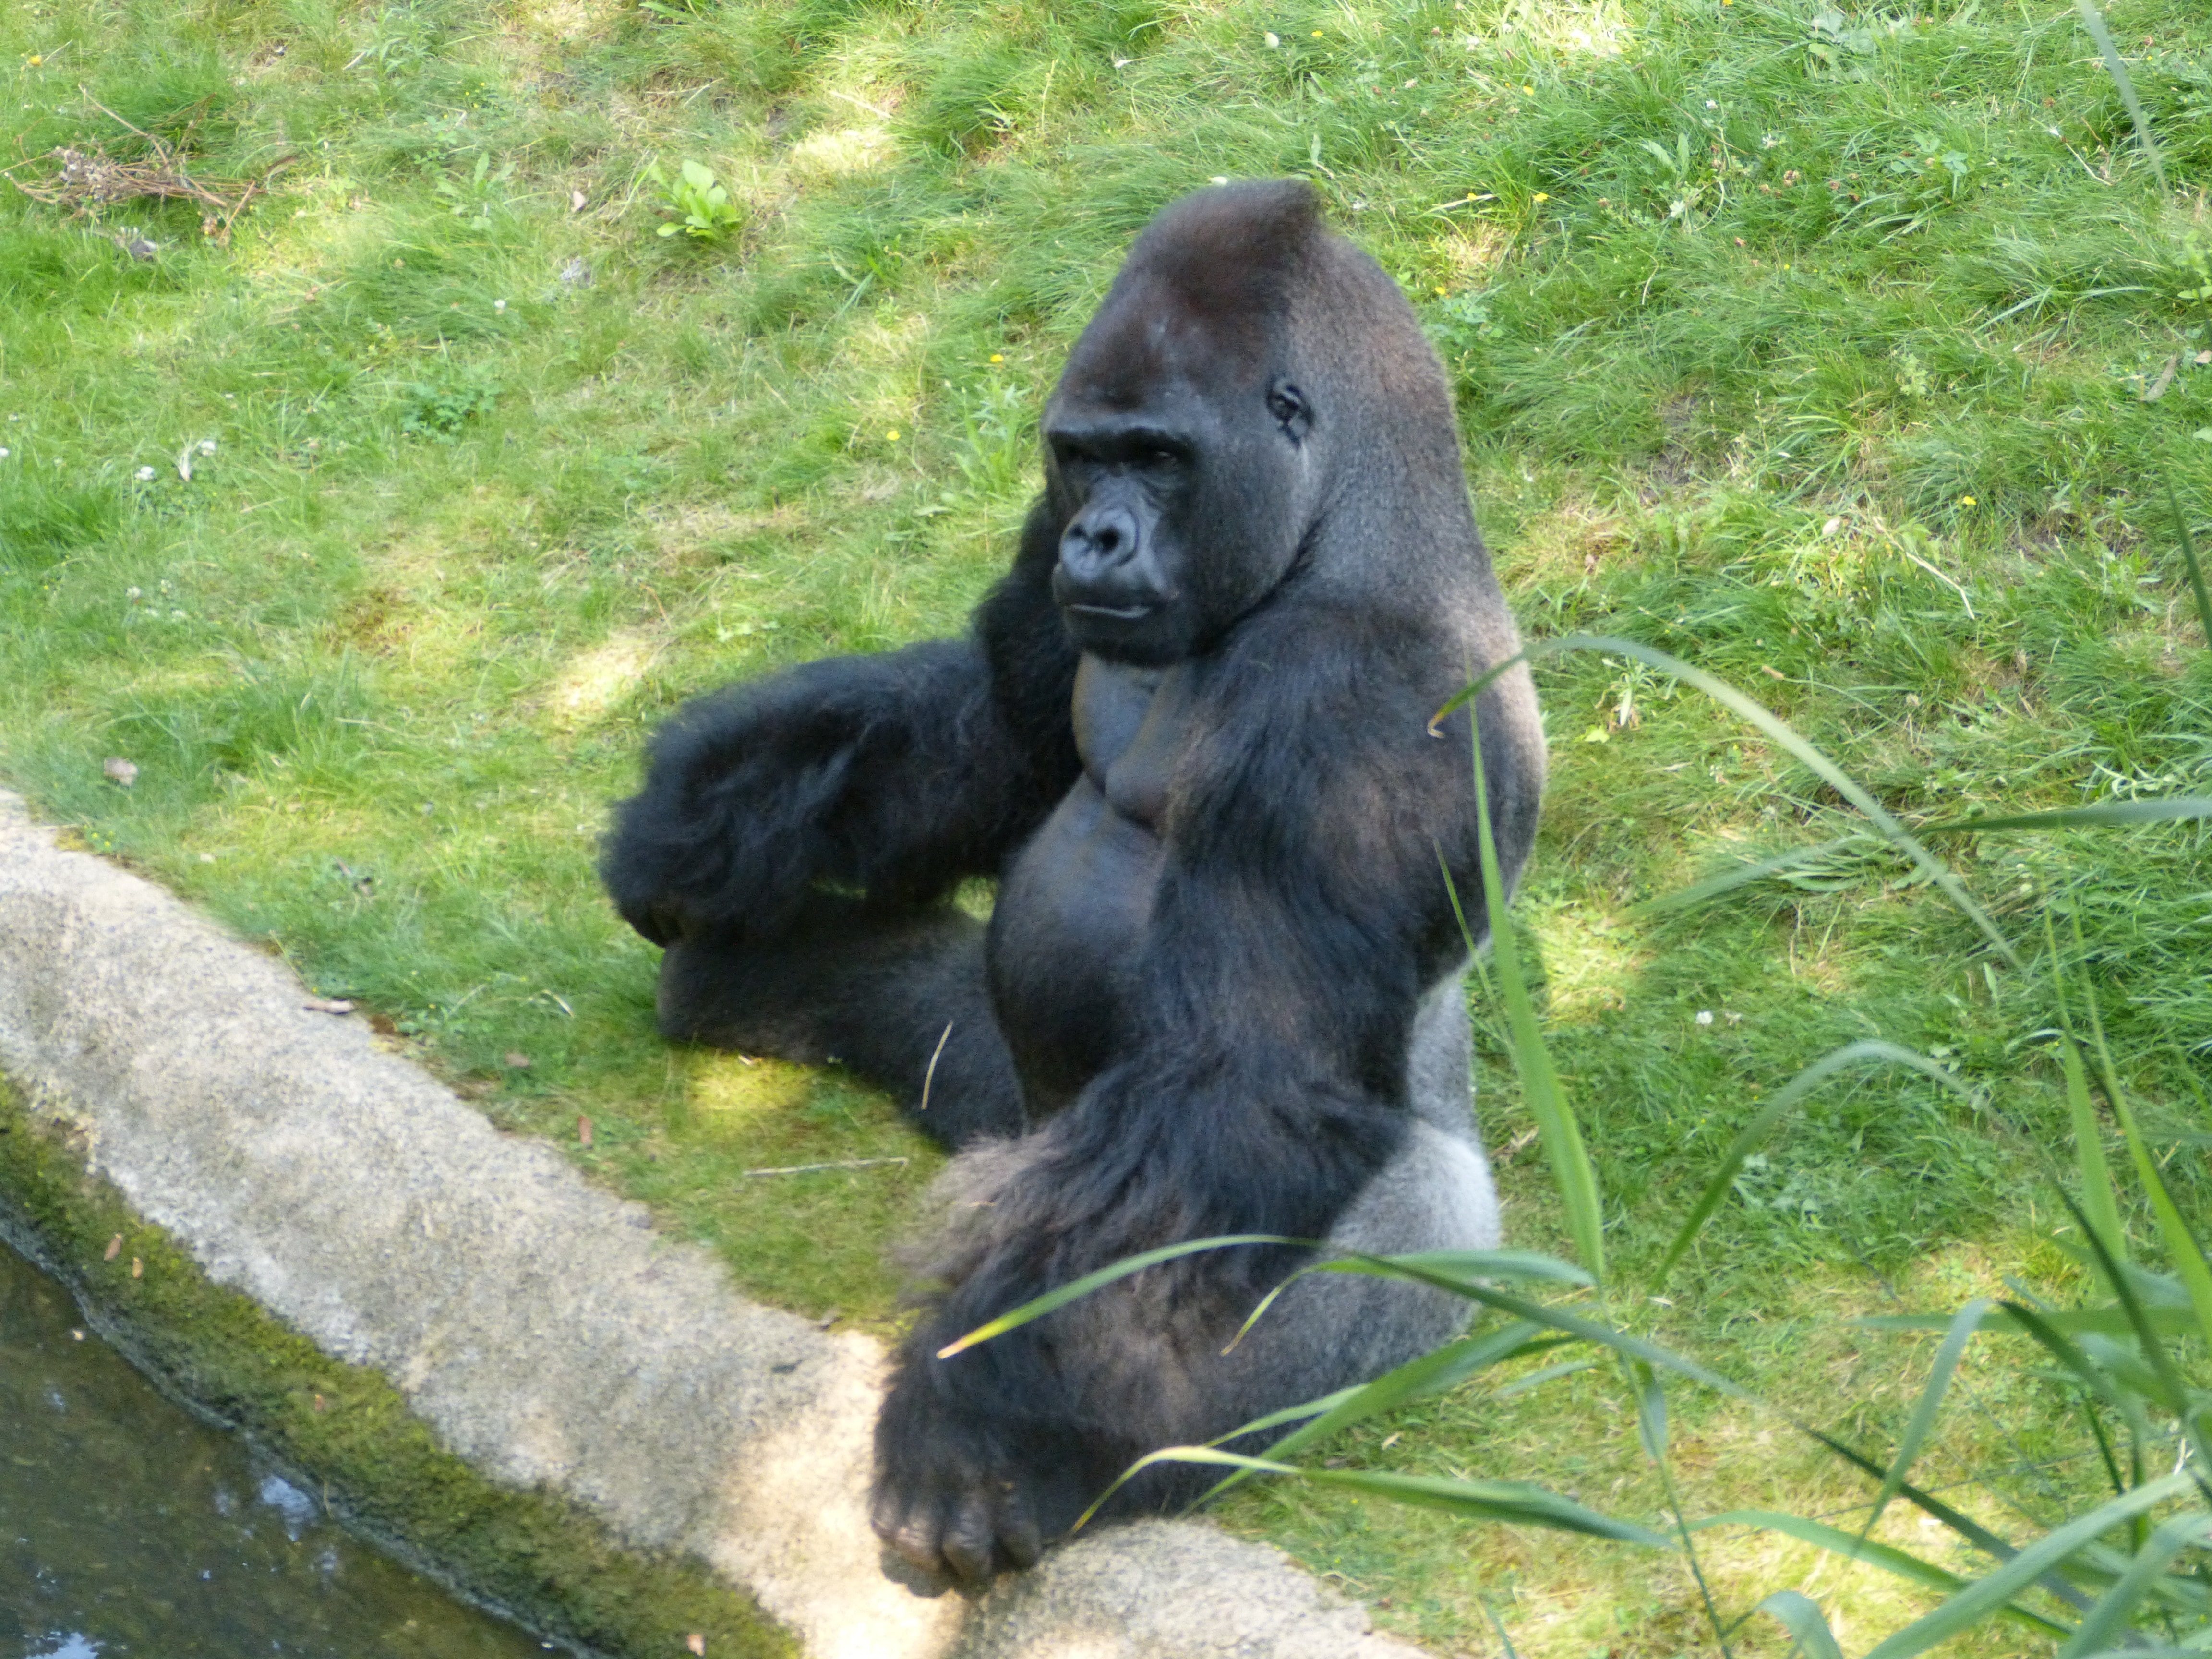 black gorilla on grass field